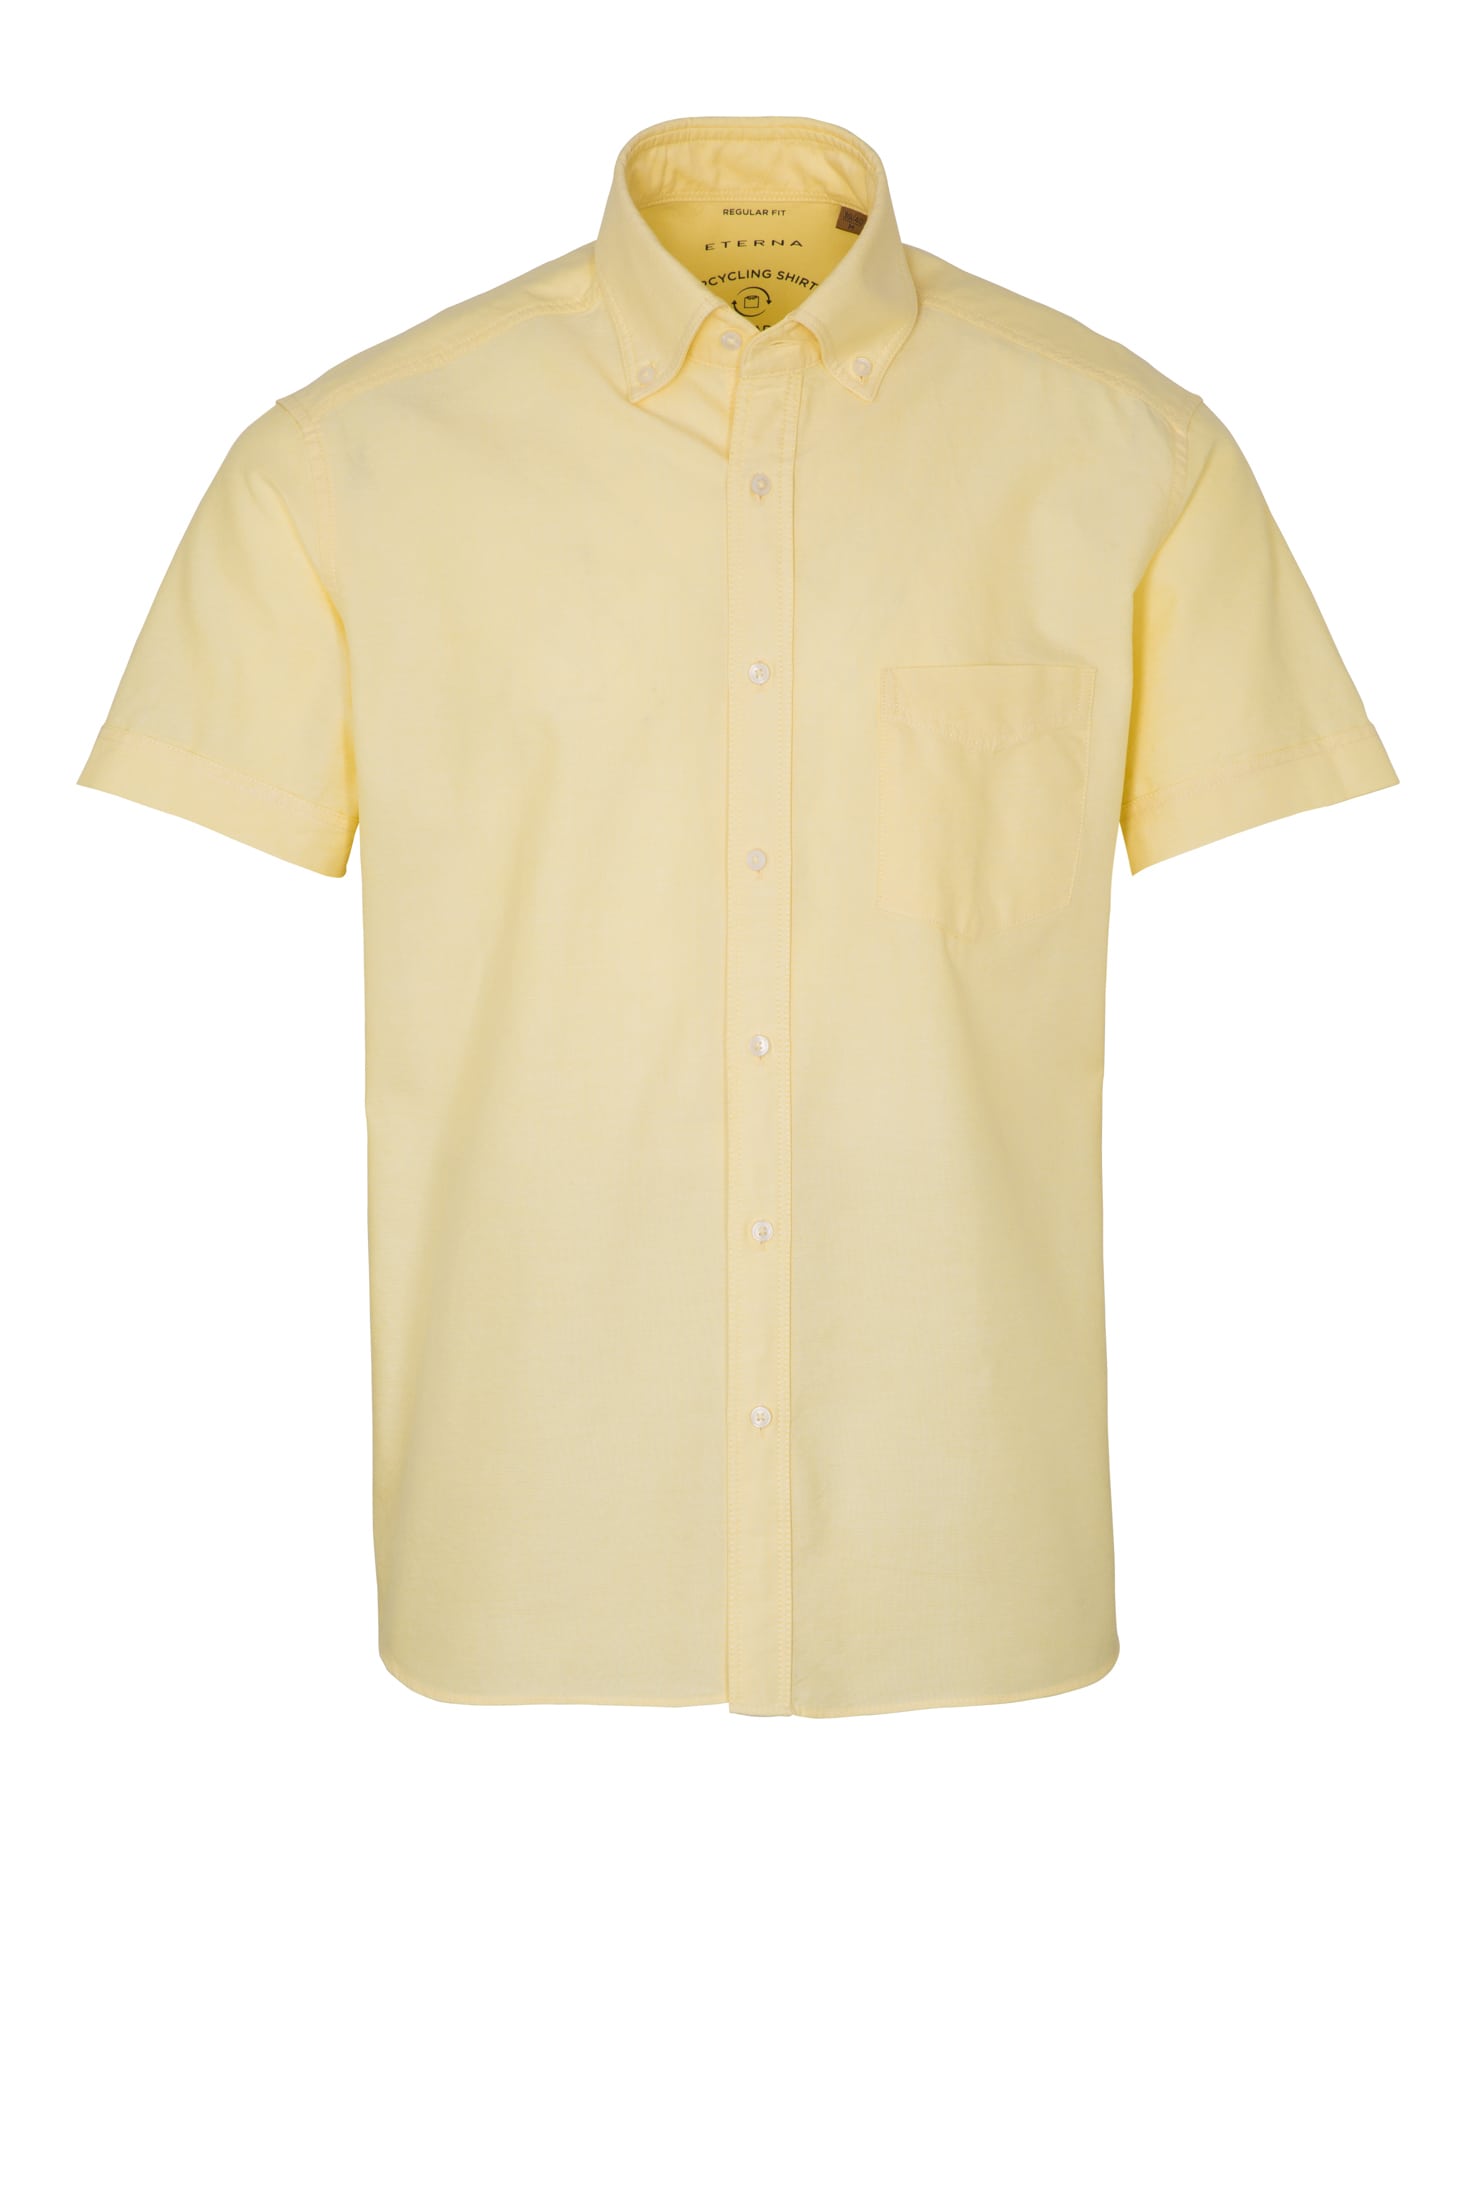 REGULAR FIT Shirt in yellow plain